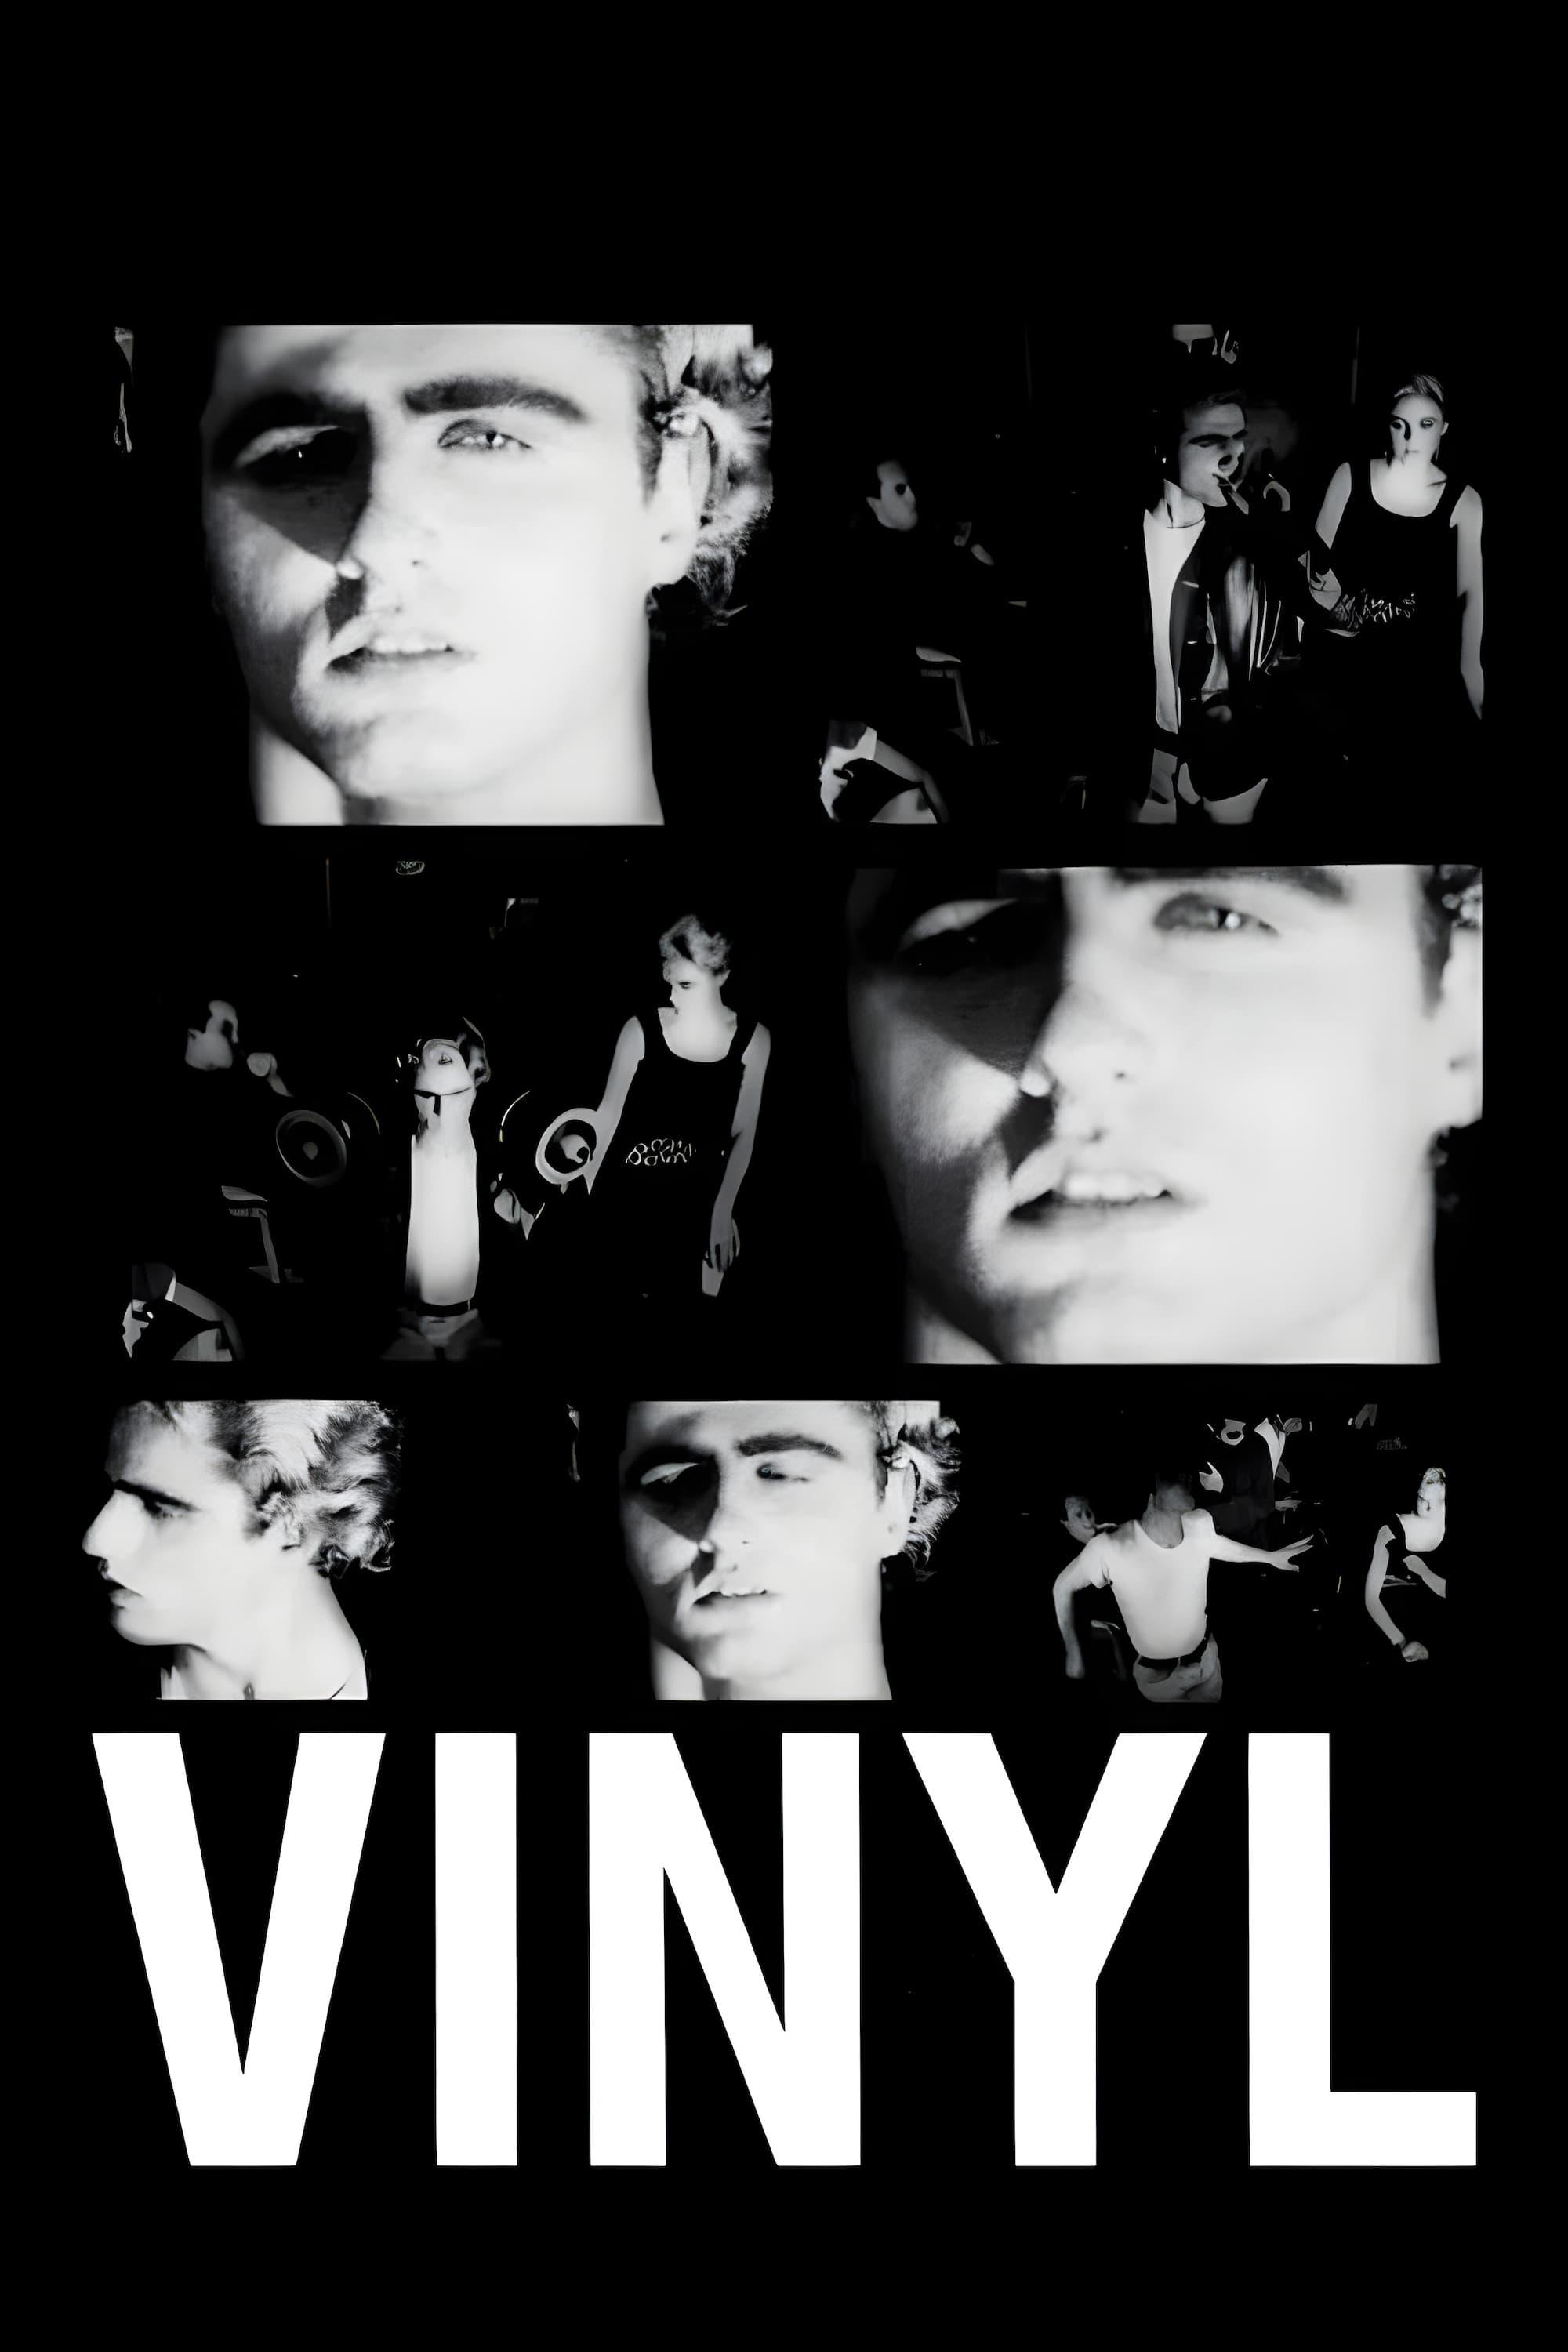 Vinyl poster